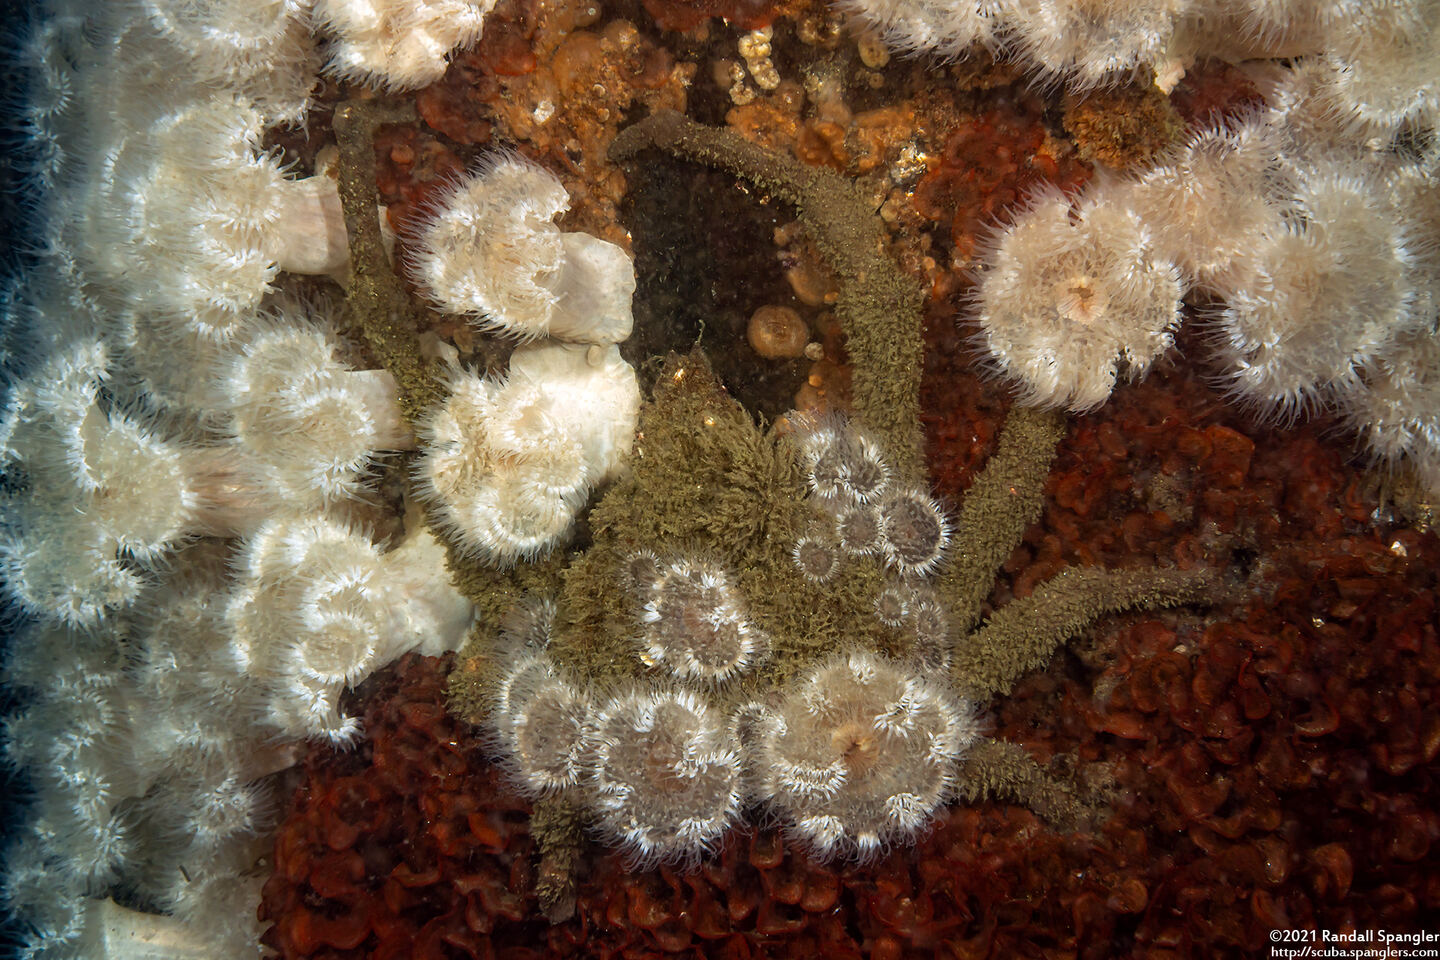 Loxorhynchus crispatus (Masking Crab); Crab covered in anemones